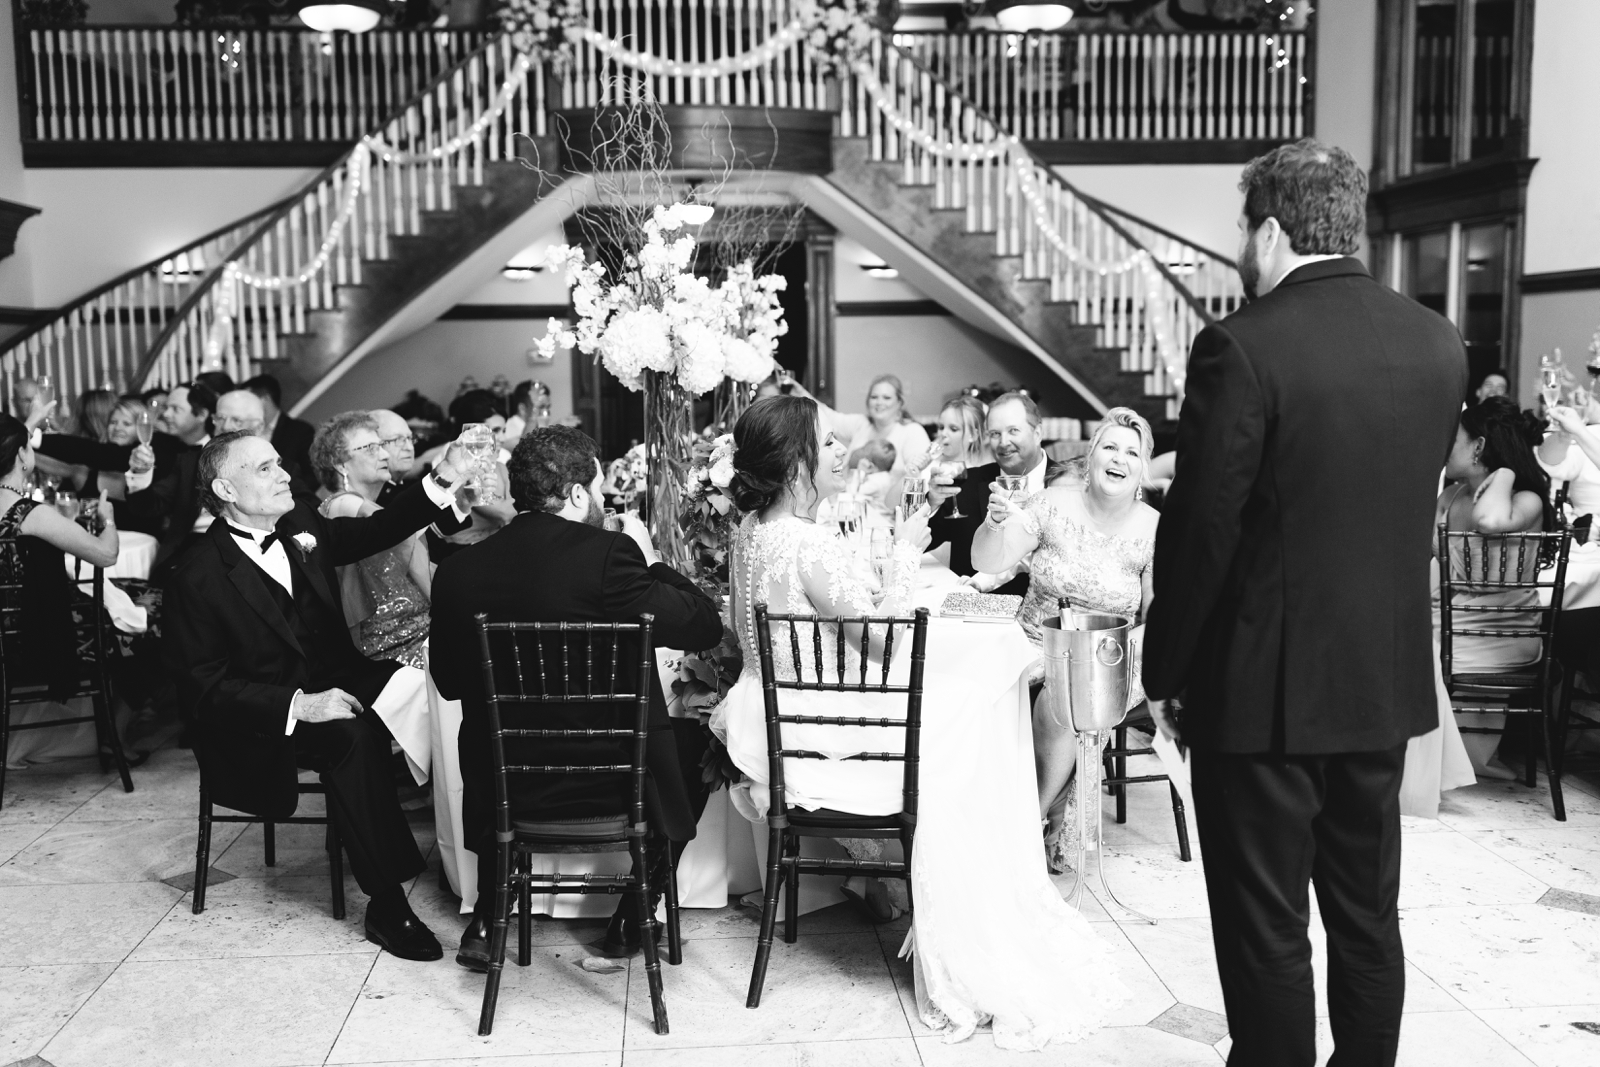 Carl House Wedding - Sydney Bruton Photography